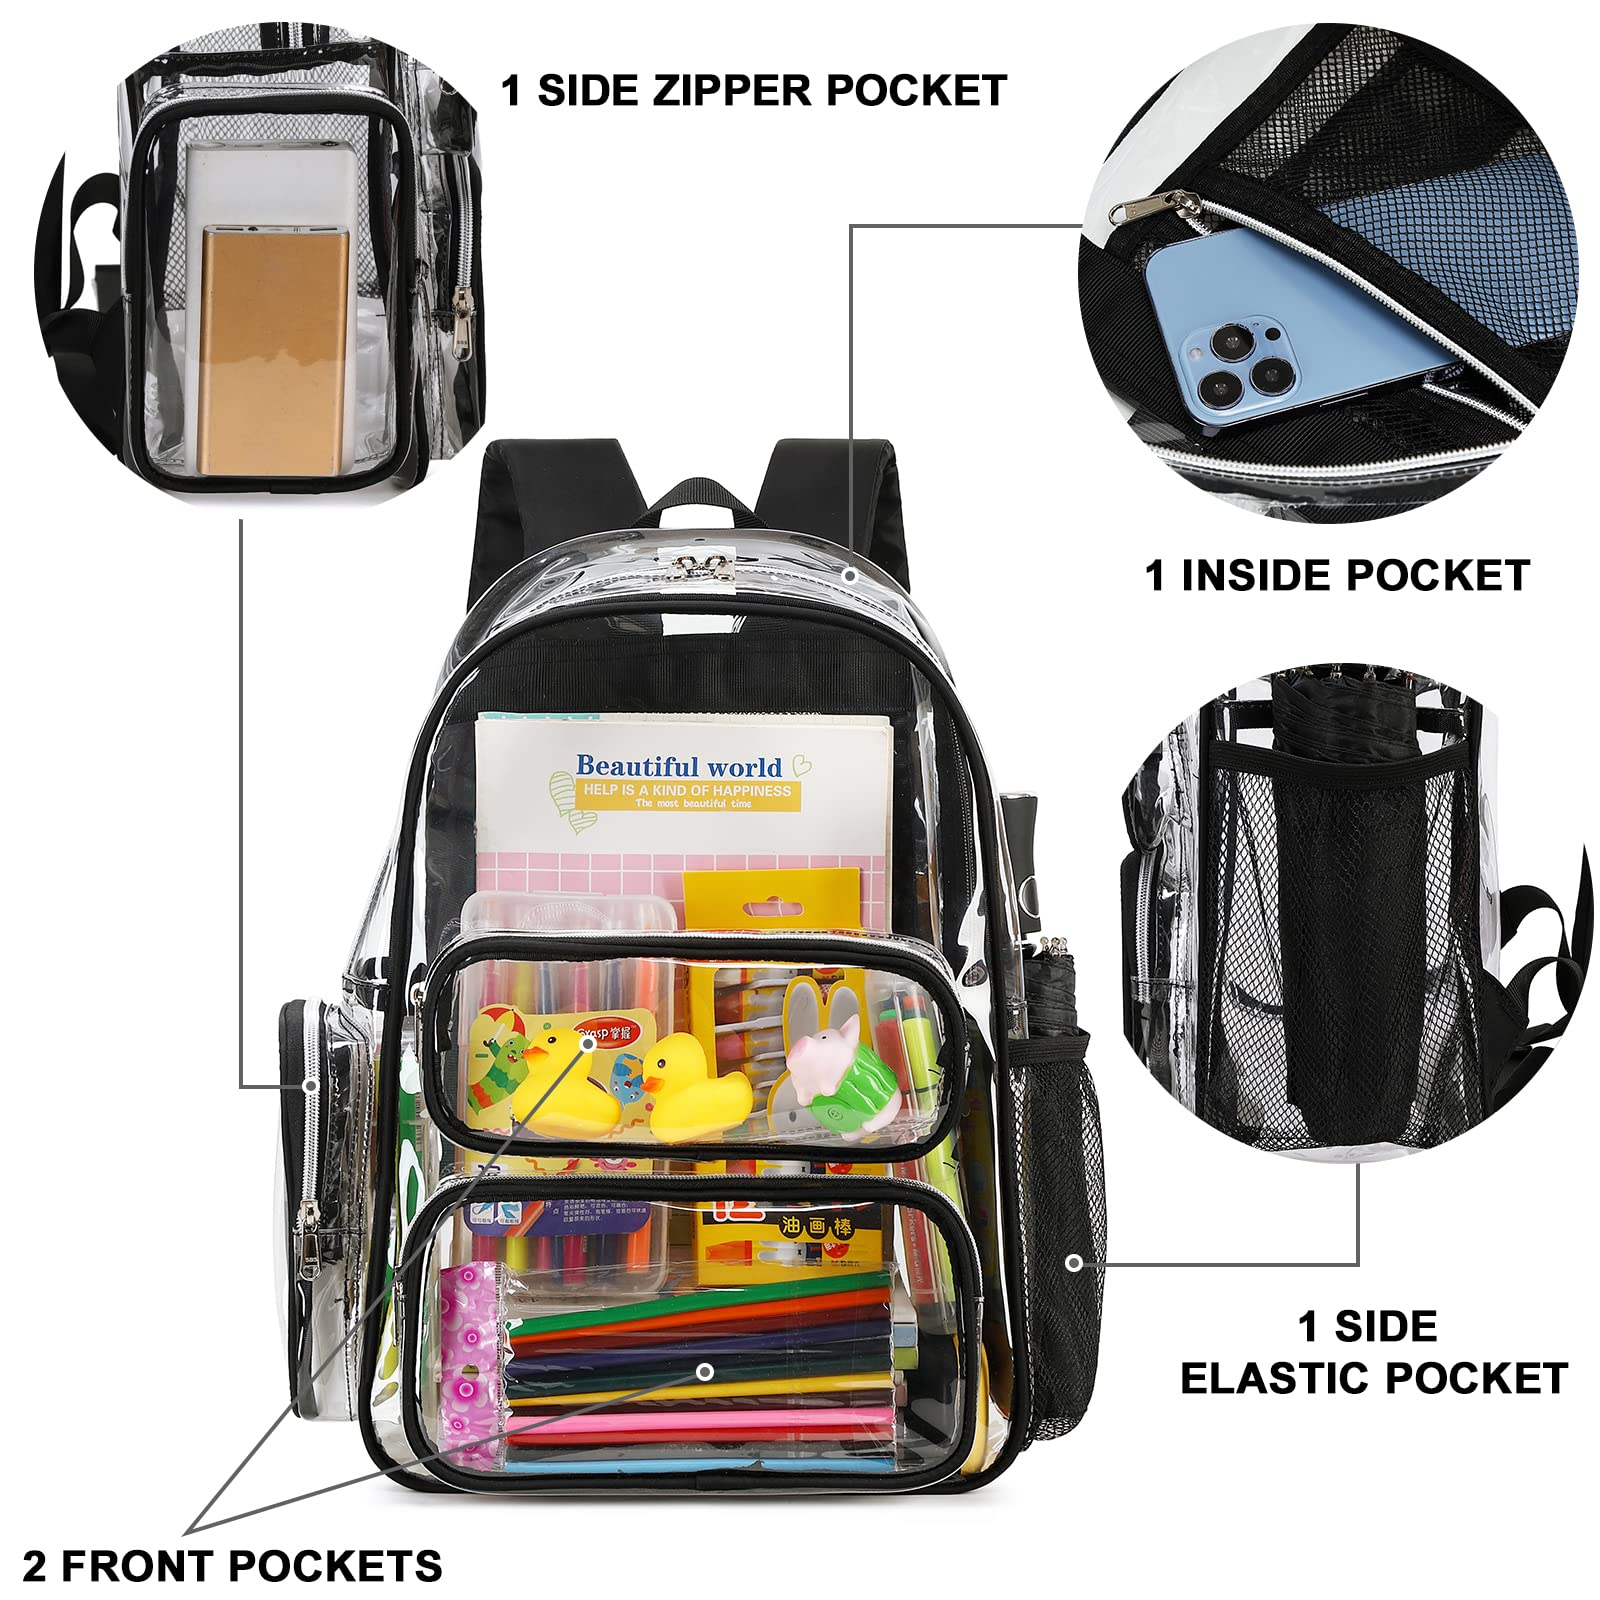 CAMTOP Clear Backpack Heavy Duty Transparent Bag See Through BookBag for Student School Work Festival Sport Travel (Black)